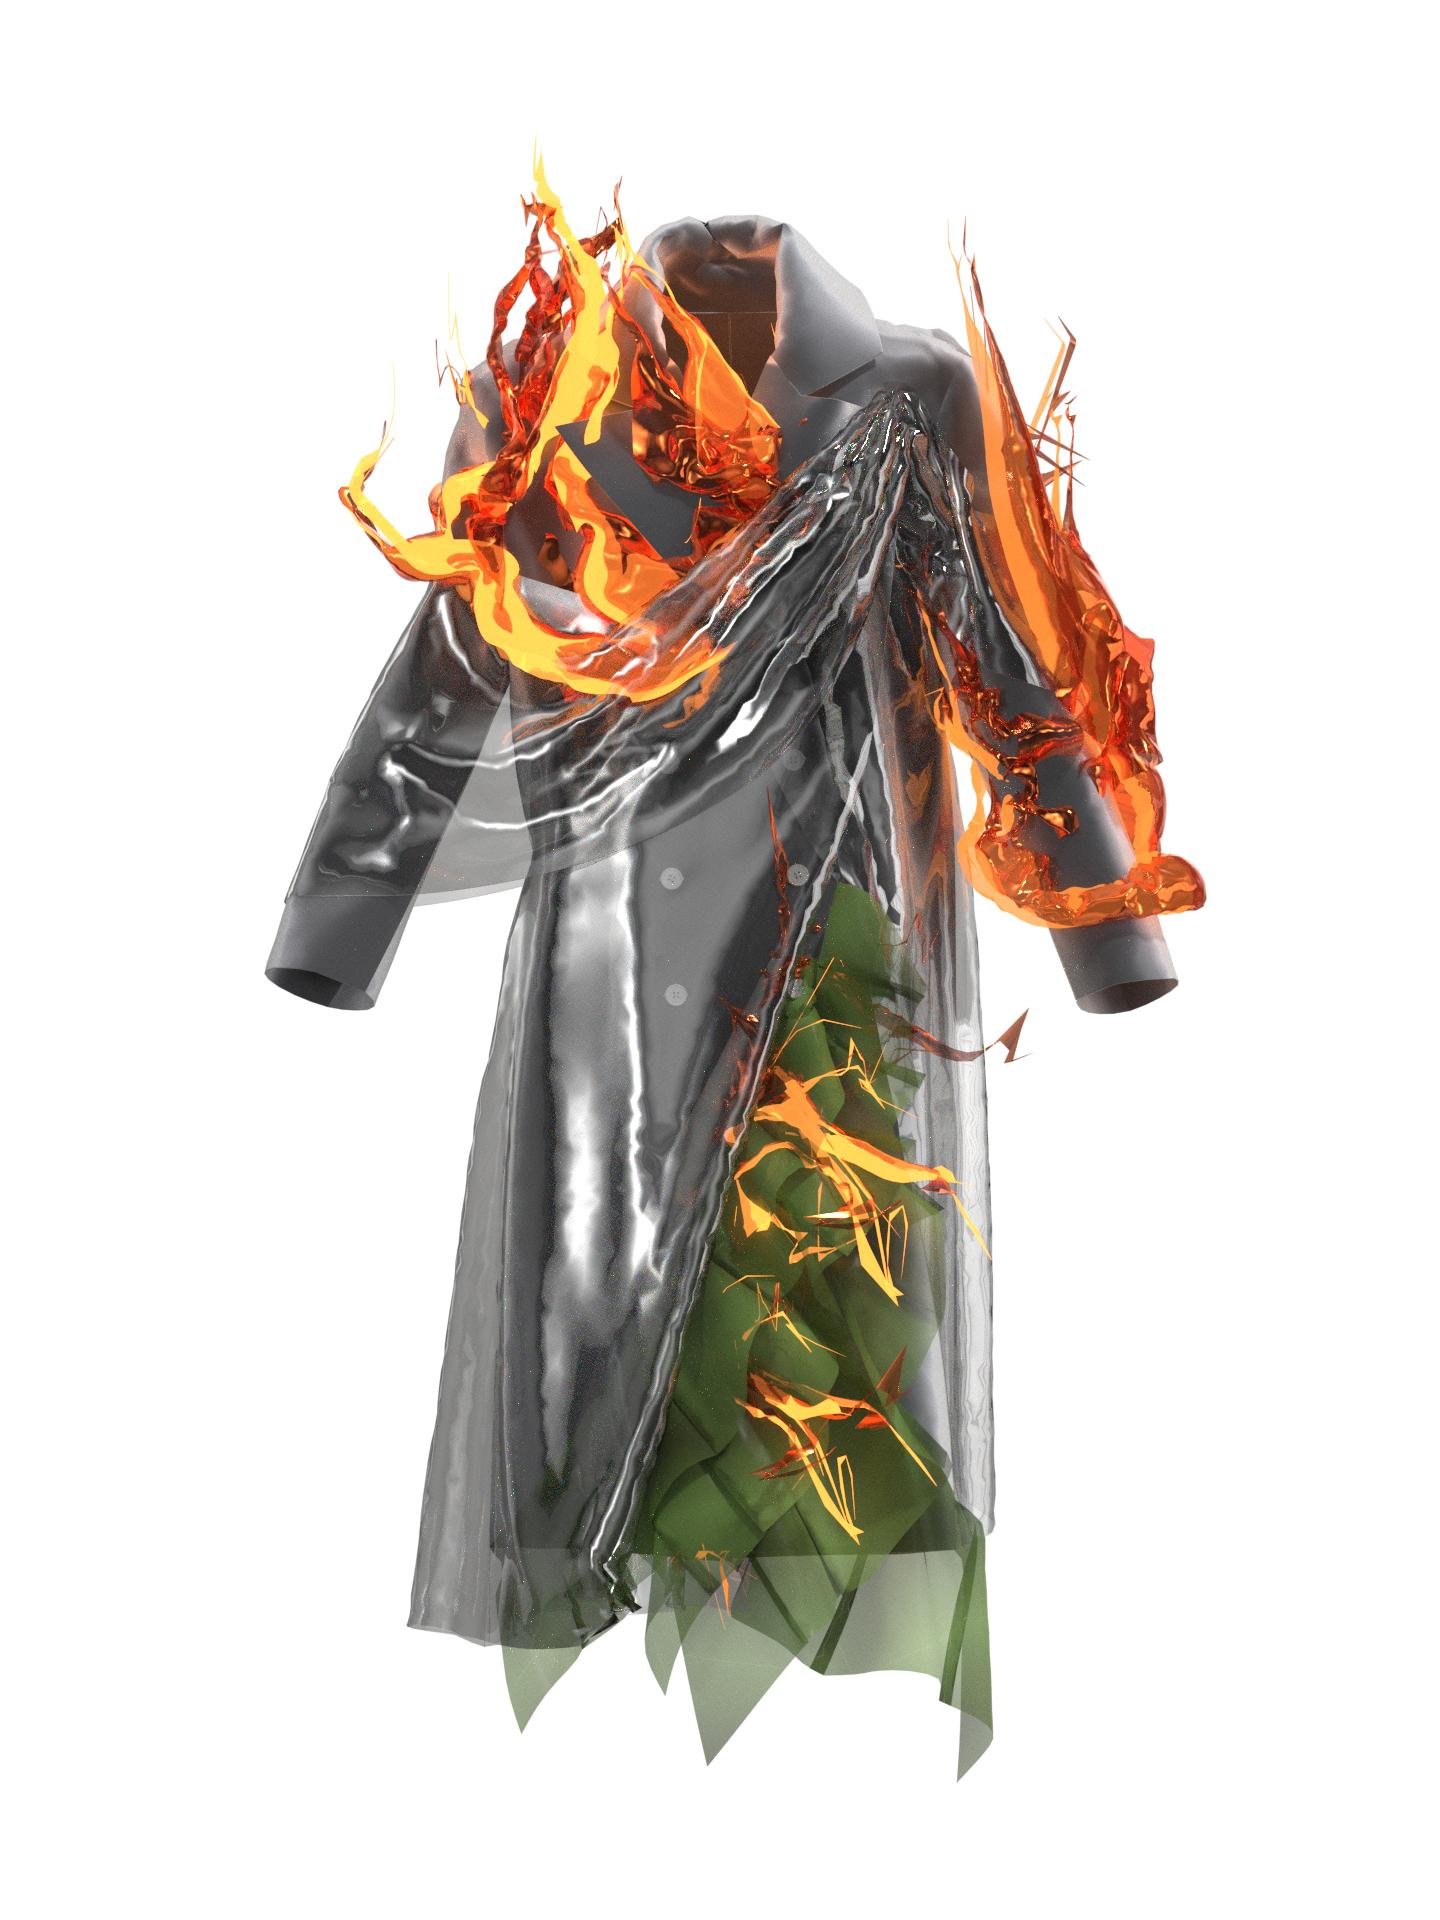 Coat on fire by ARGONAUTS STUDIO